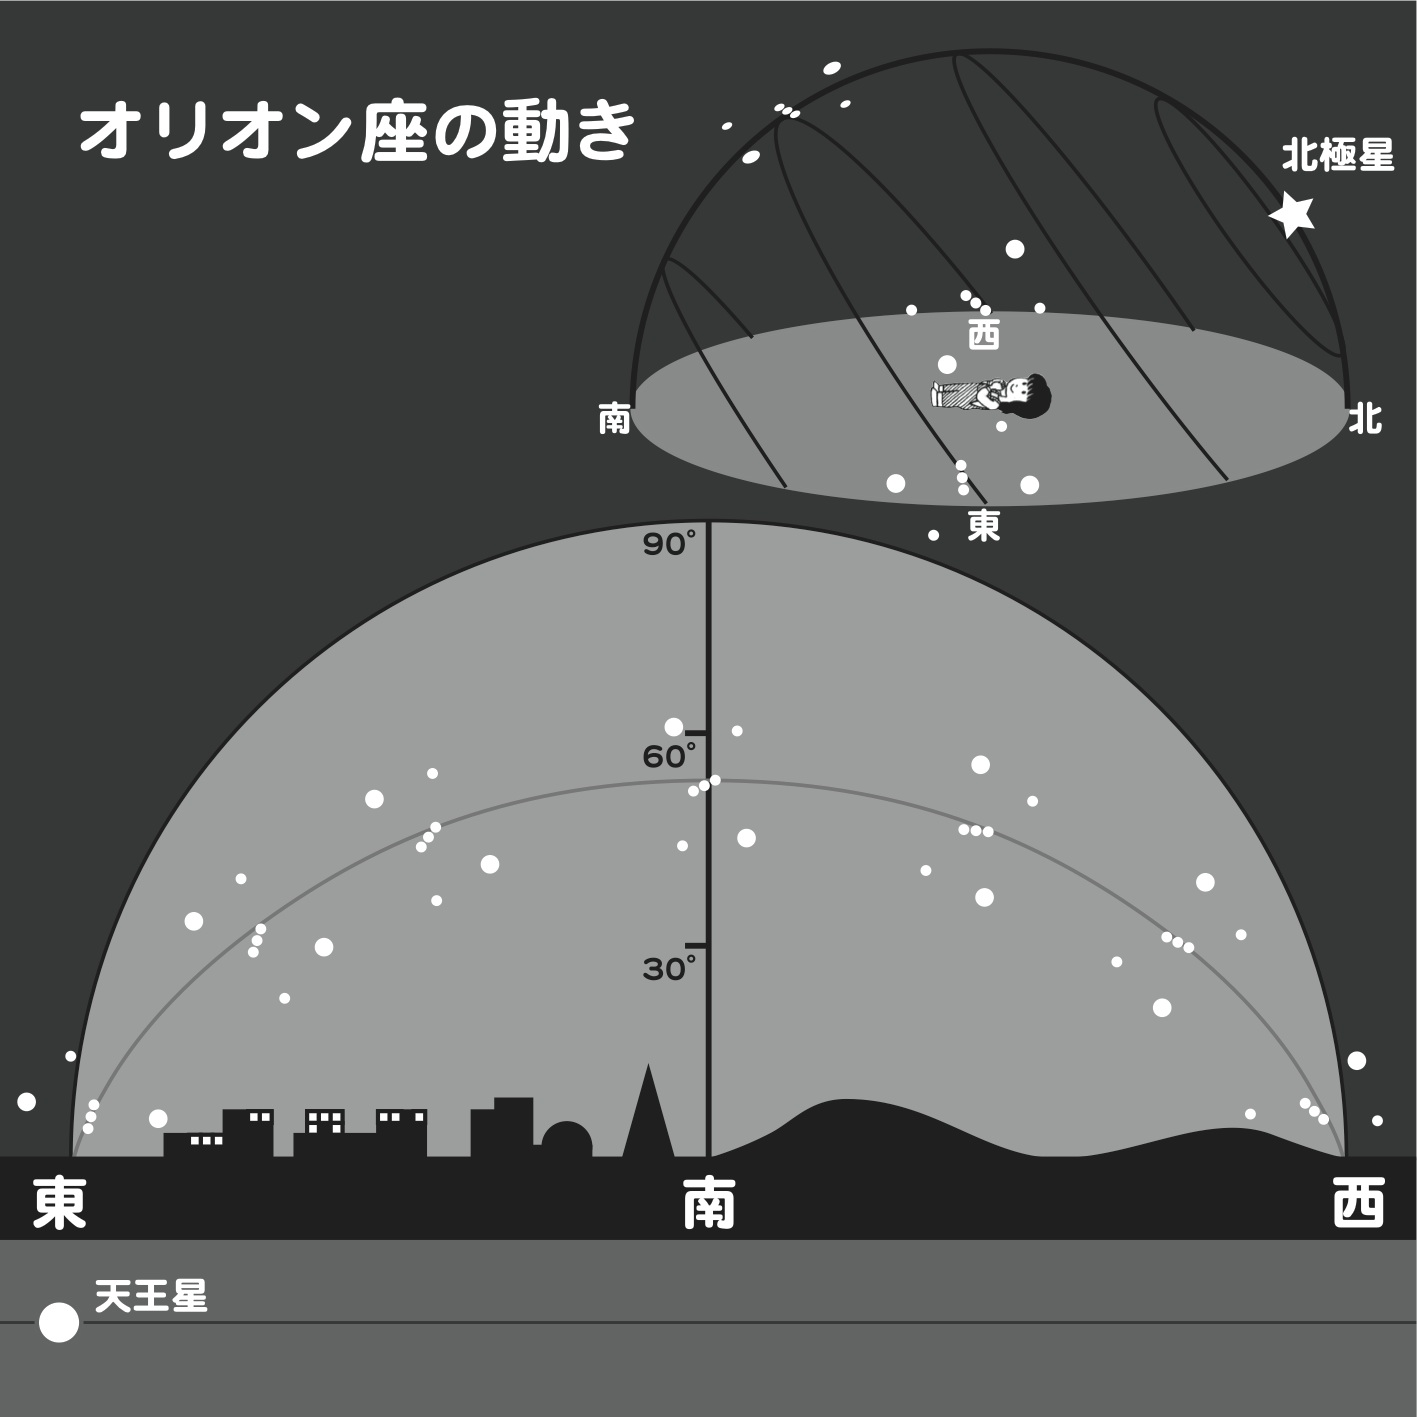 http://www.ncsm.city.nagoya.jp/study/astro/P7_diurnal_motion_Orion.jpg